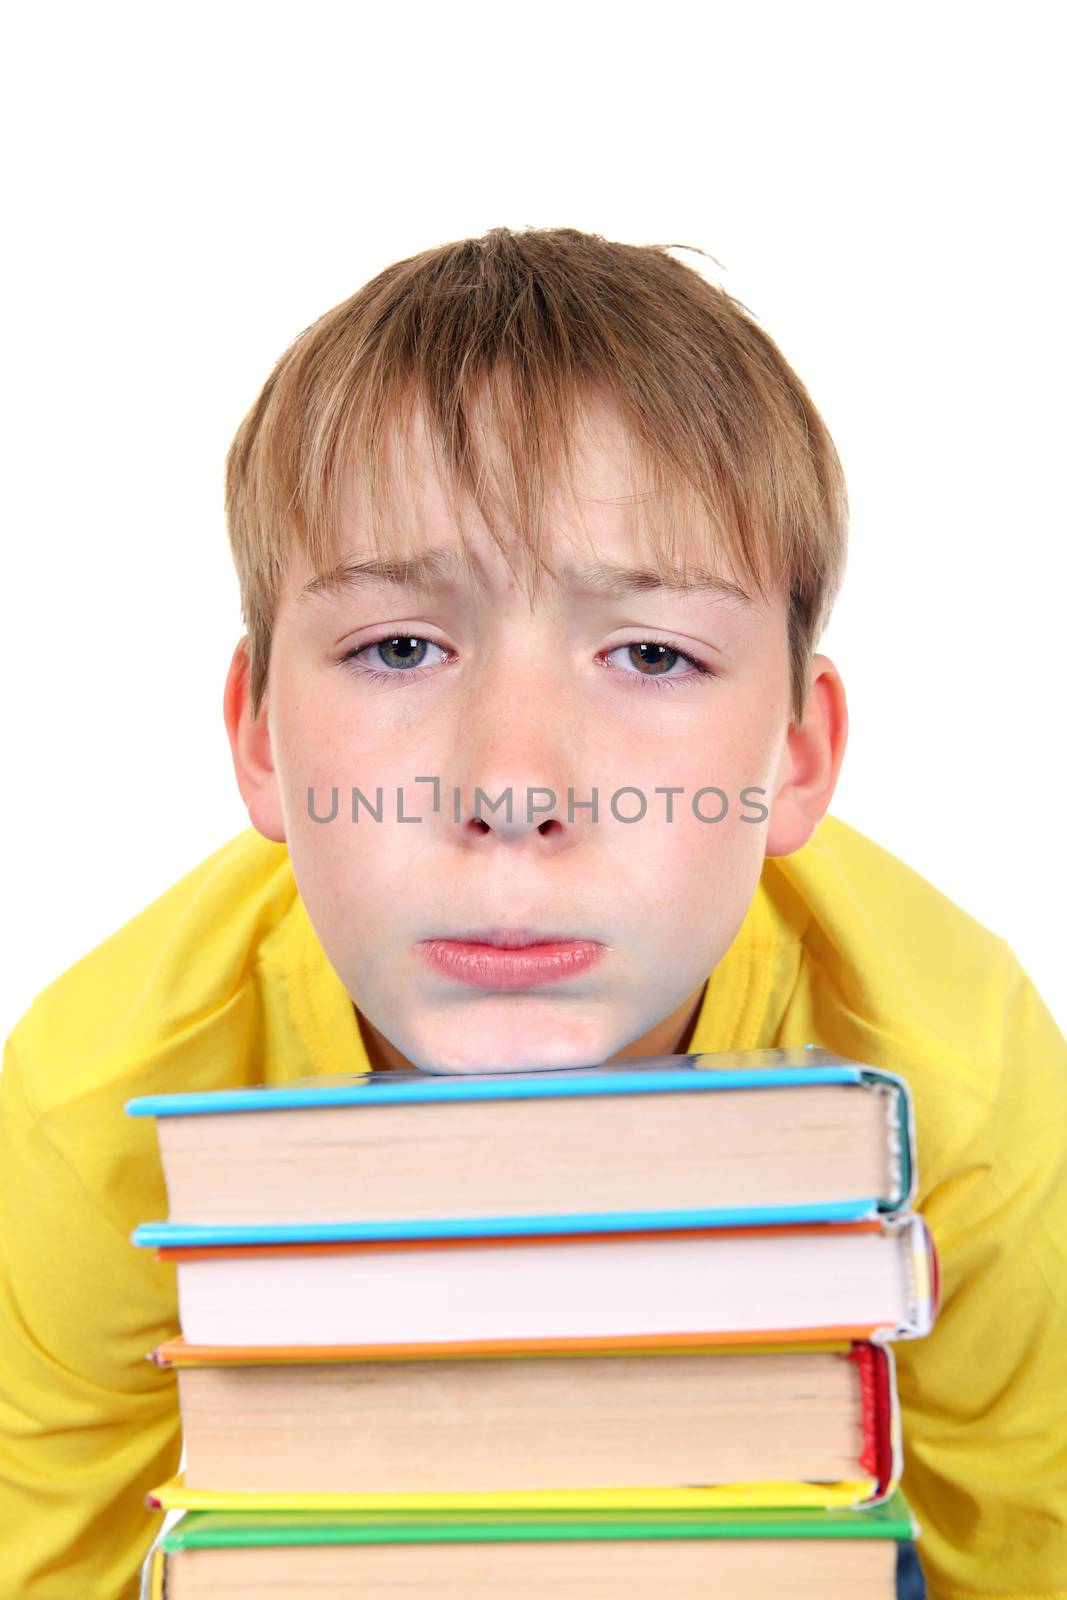 Sad Kid with a Books by sabphoto